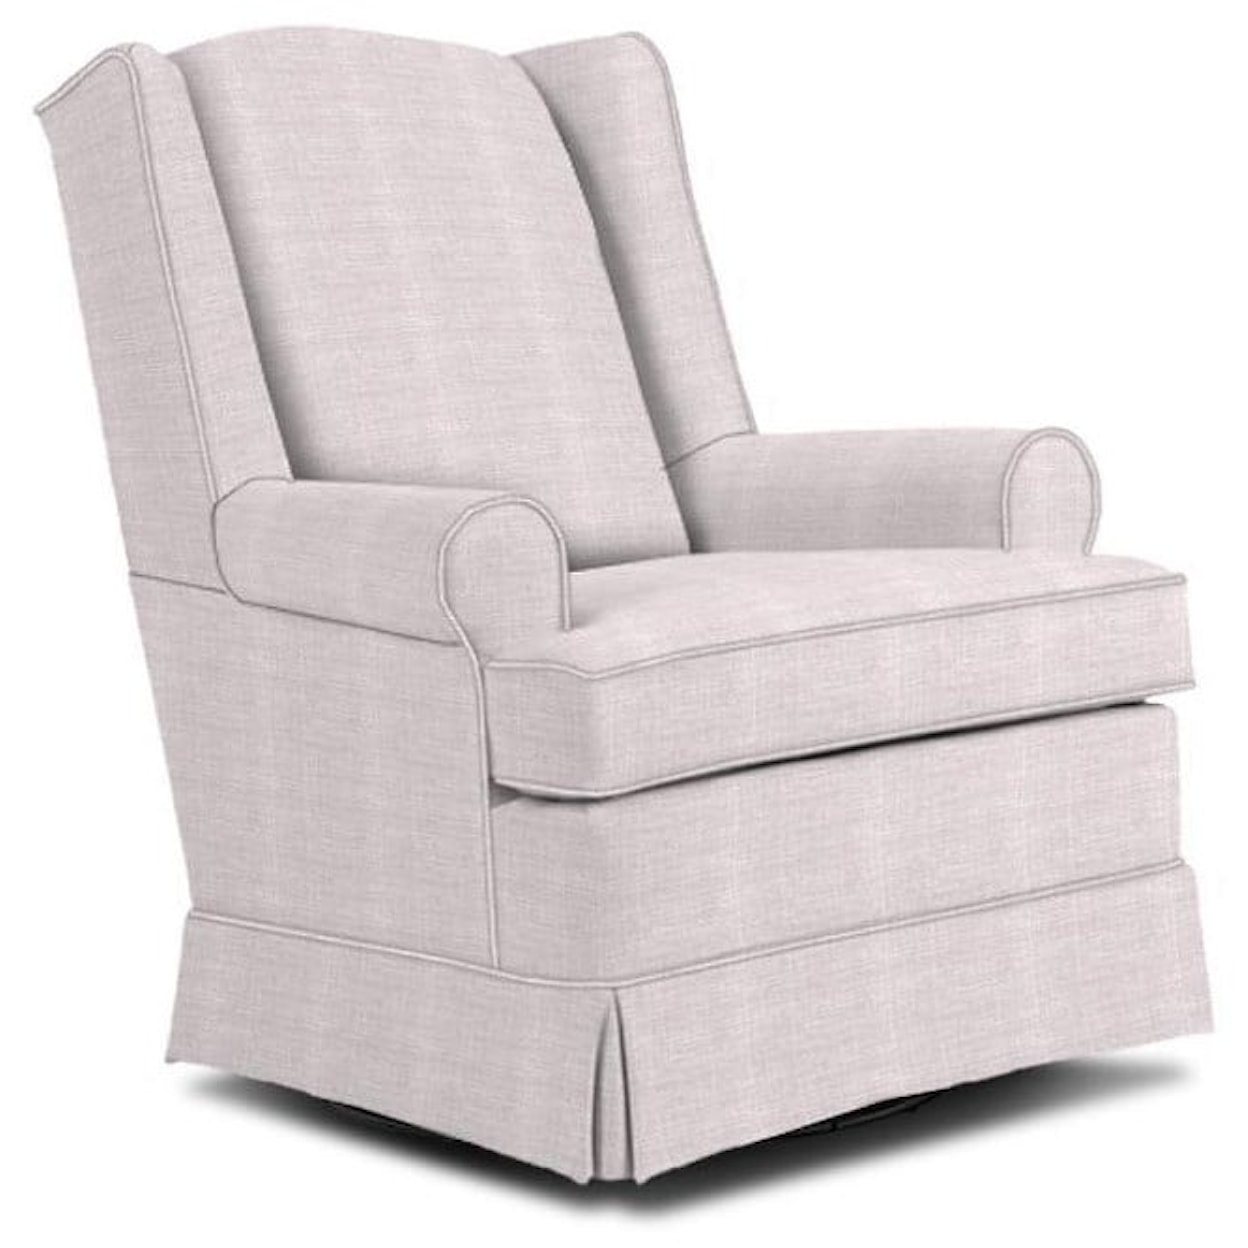 Bravo Furniture Roni Swivel Glider Chair